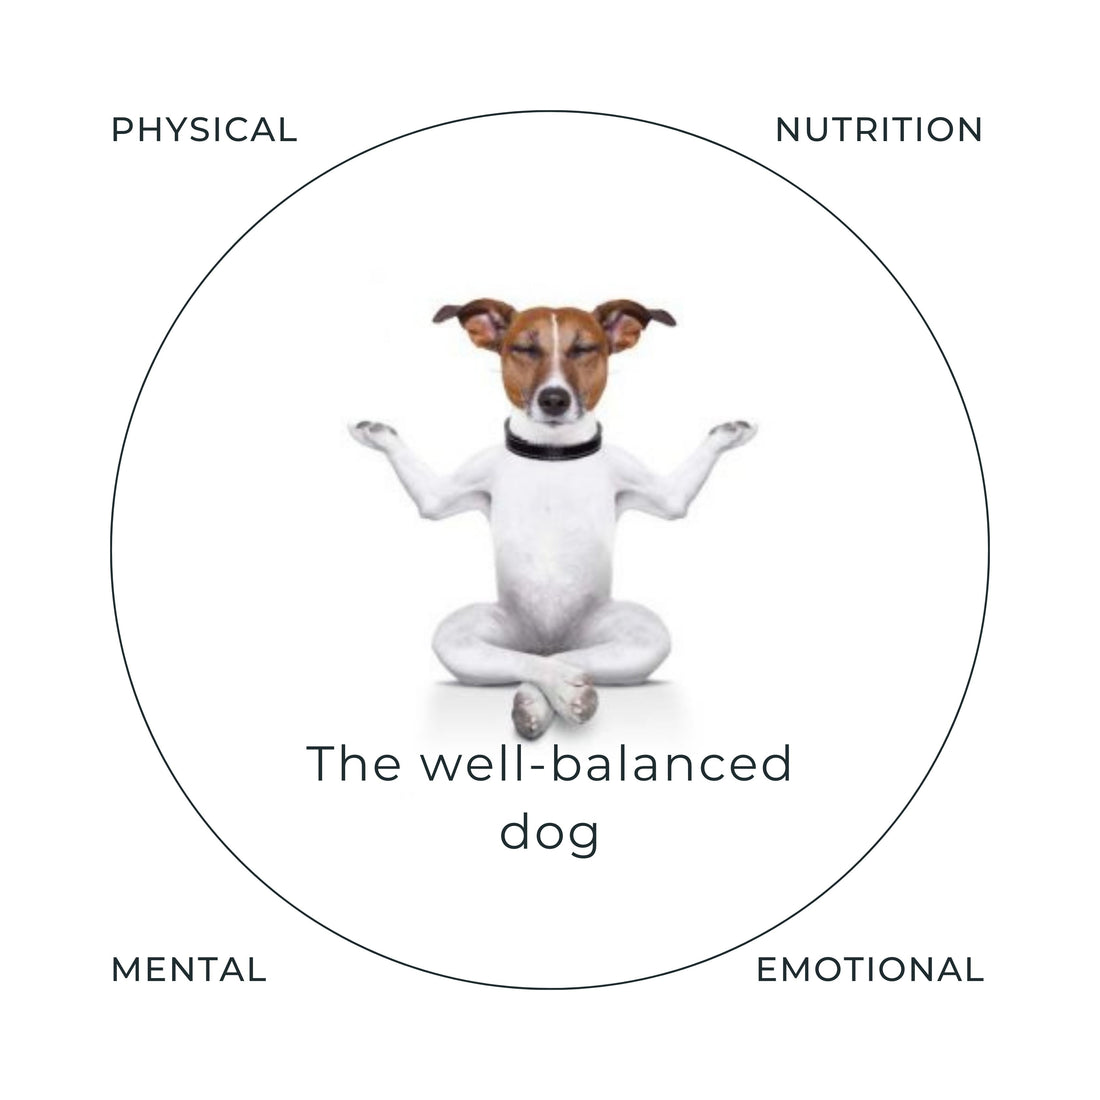 The well-balanced dog